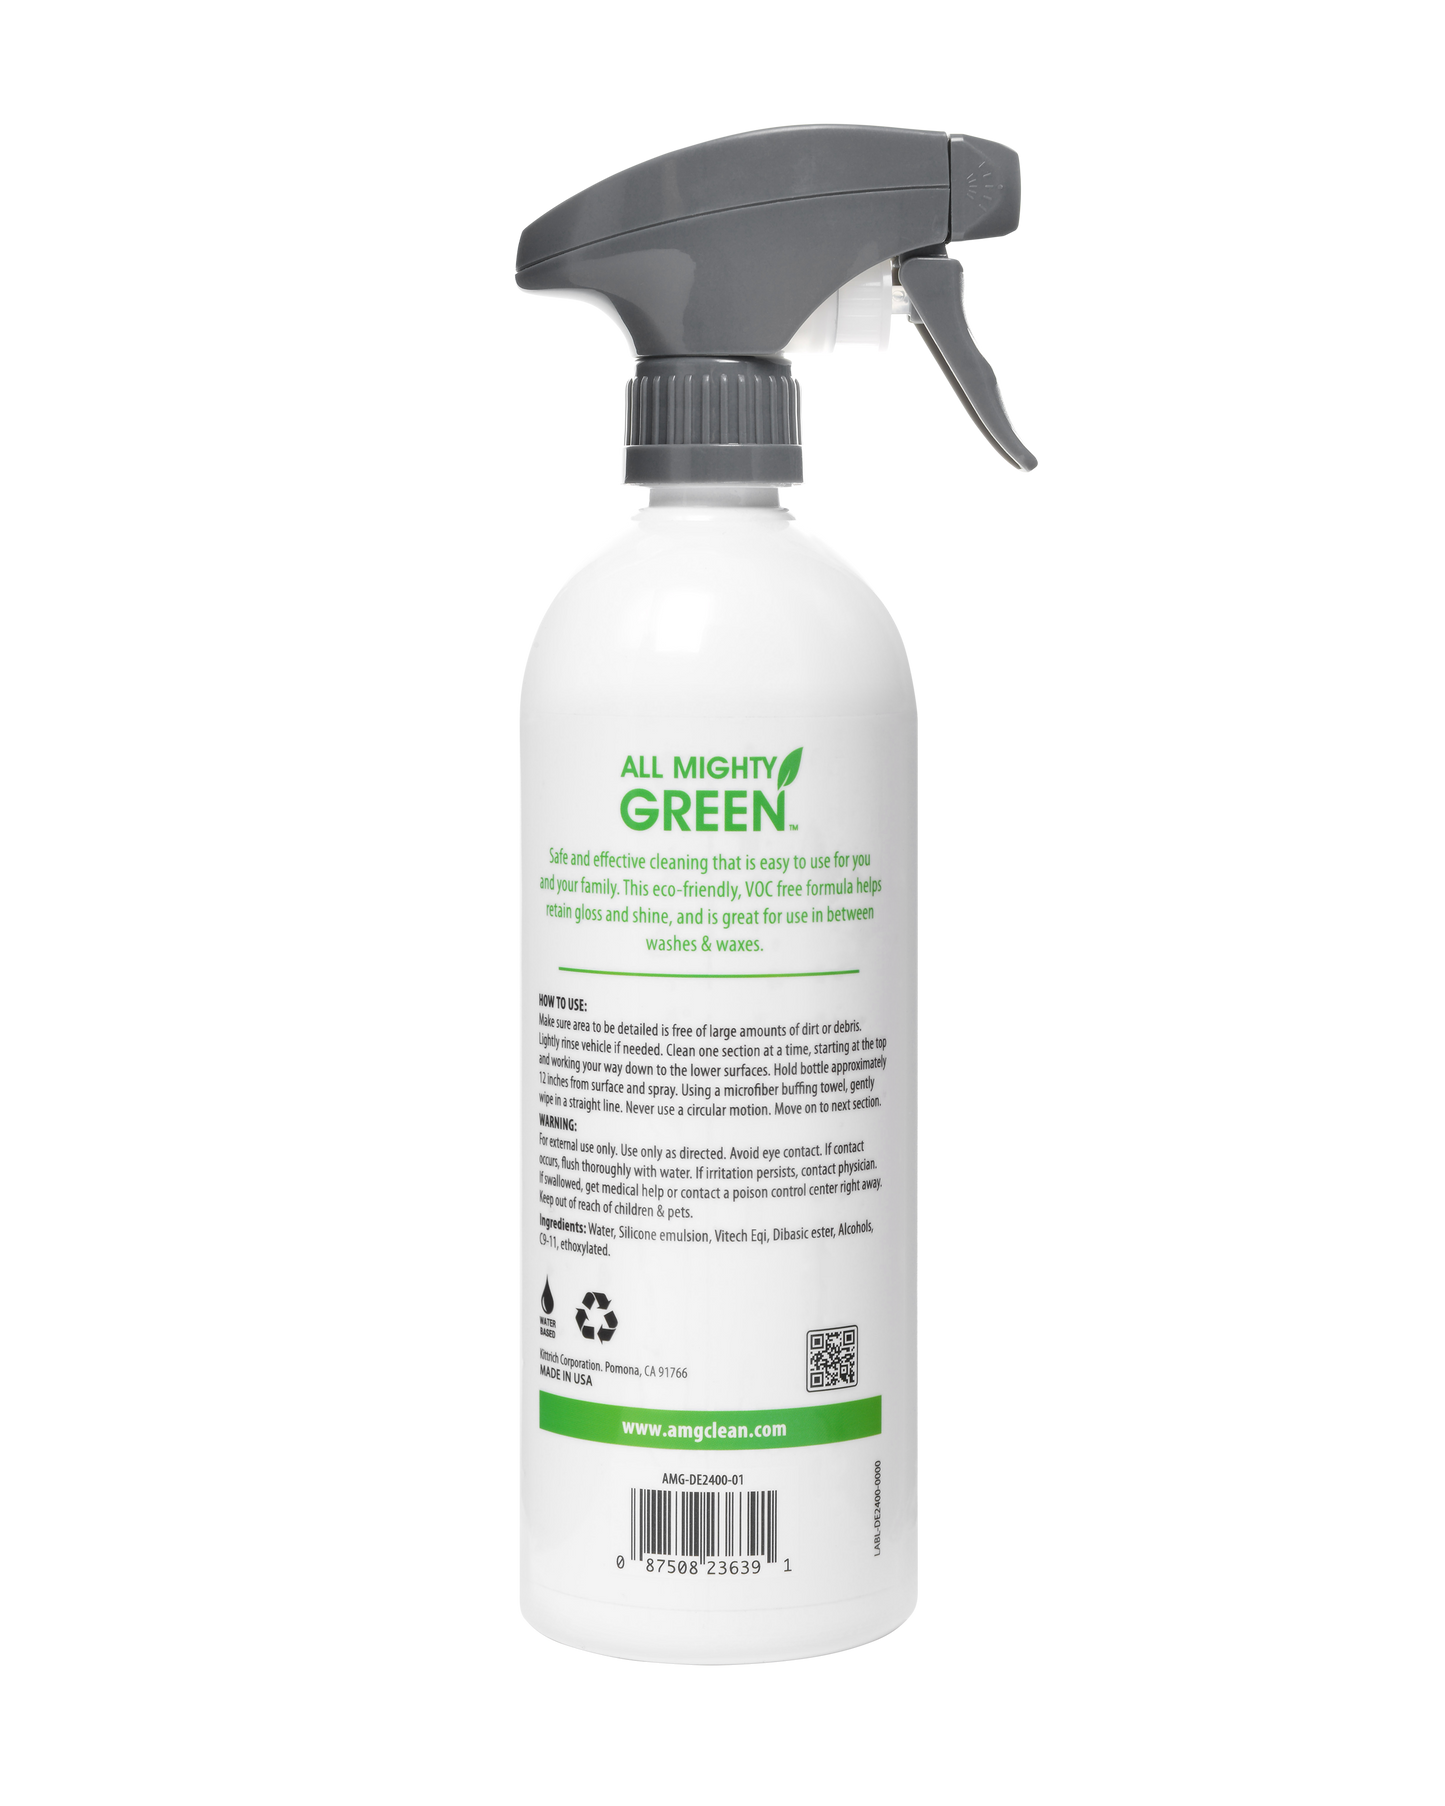 All Mighty Green Waterless Detailer | 24 oz. Spray